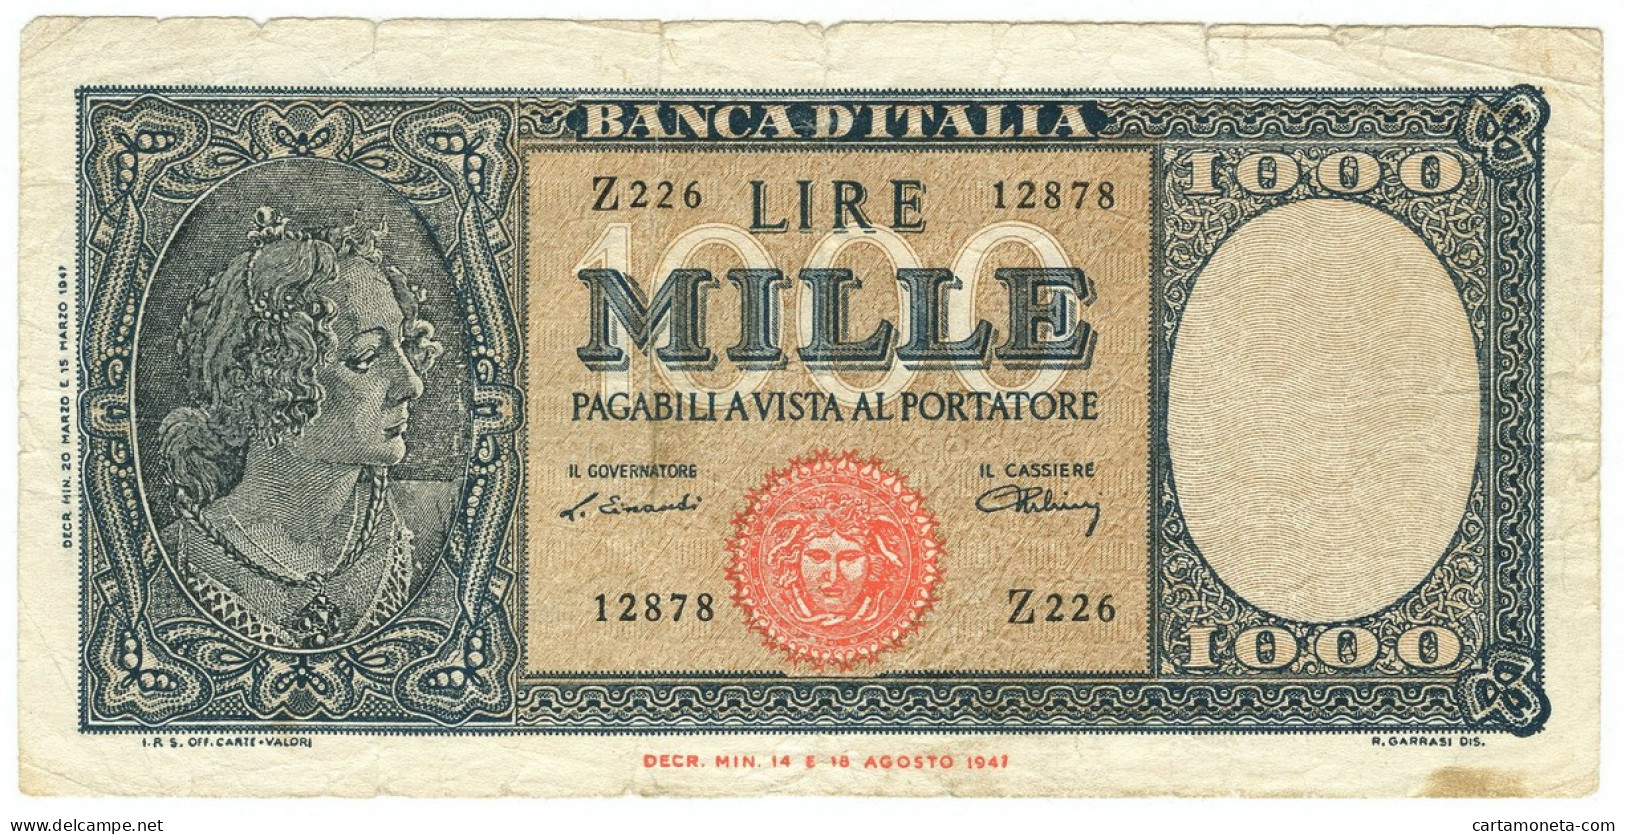 1000 LIRE FALSO D'EPOCA ITALIA ORNATA DI PERLE MEDUSA 20/03/1947 MB/BB - [ 8] Ficticios & Especimenes